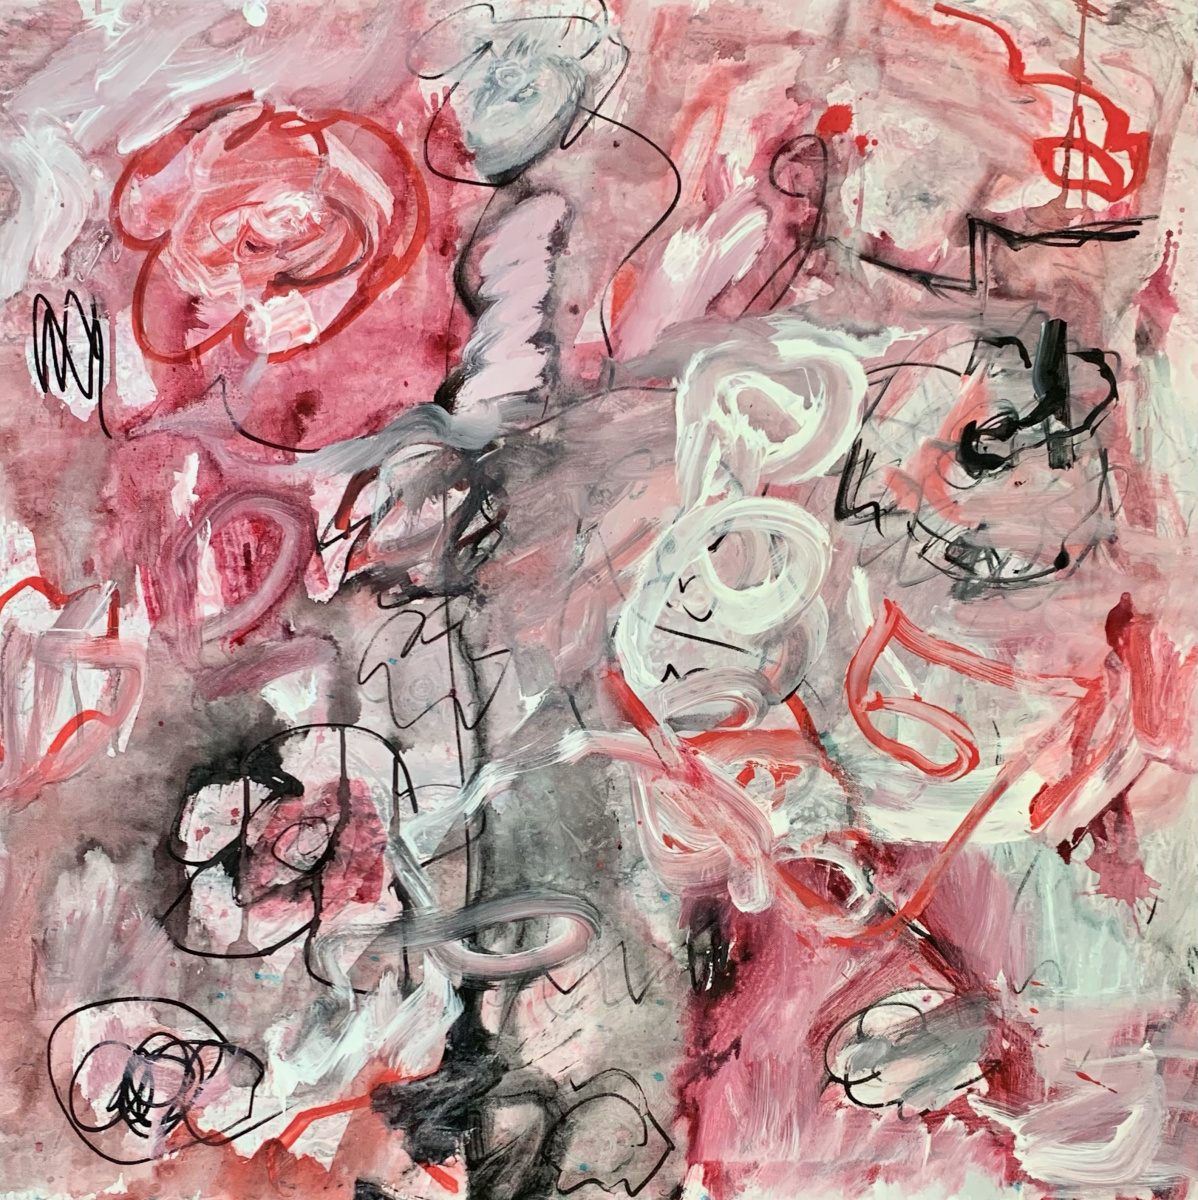 Wild rose#1, acrylic on canvas 36x36"